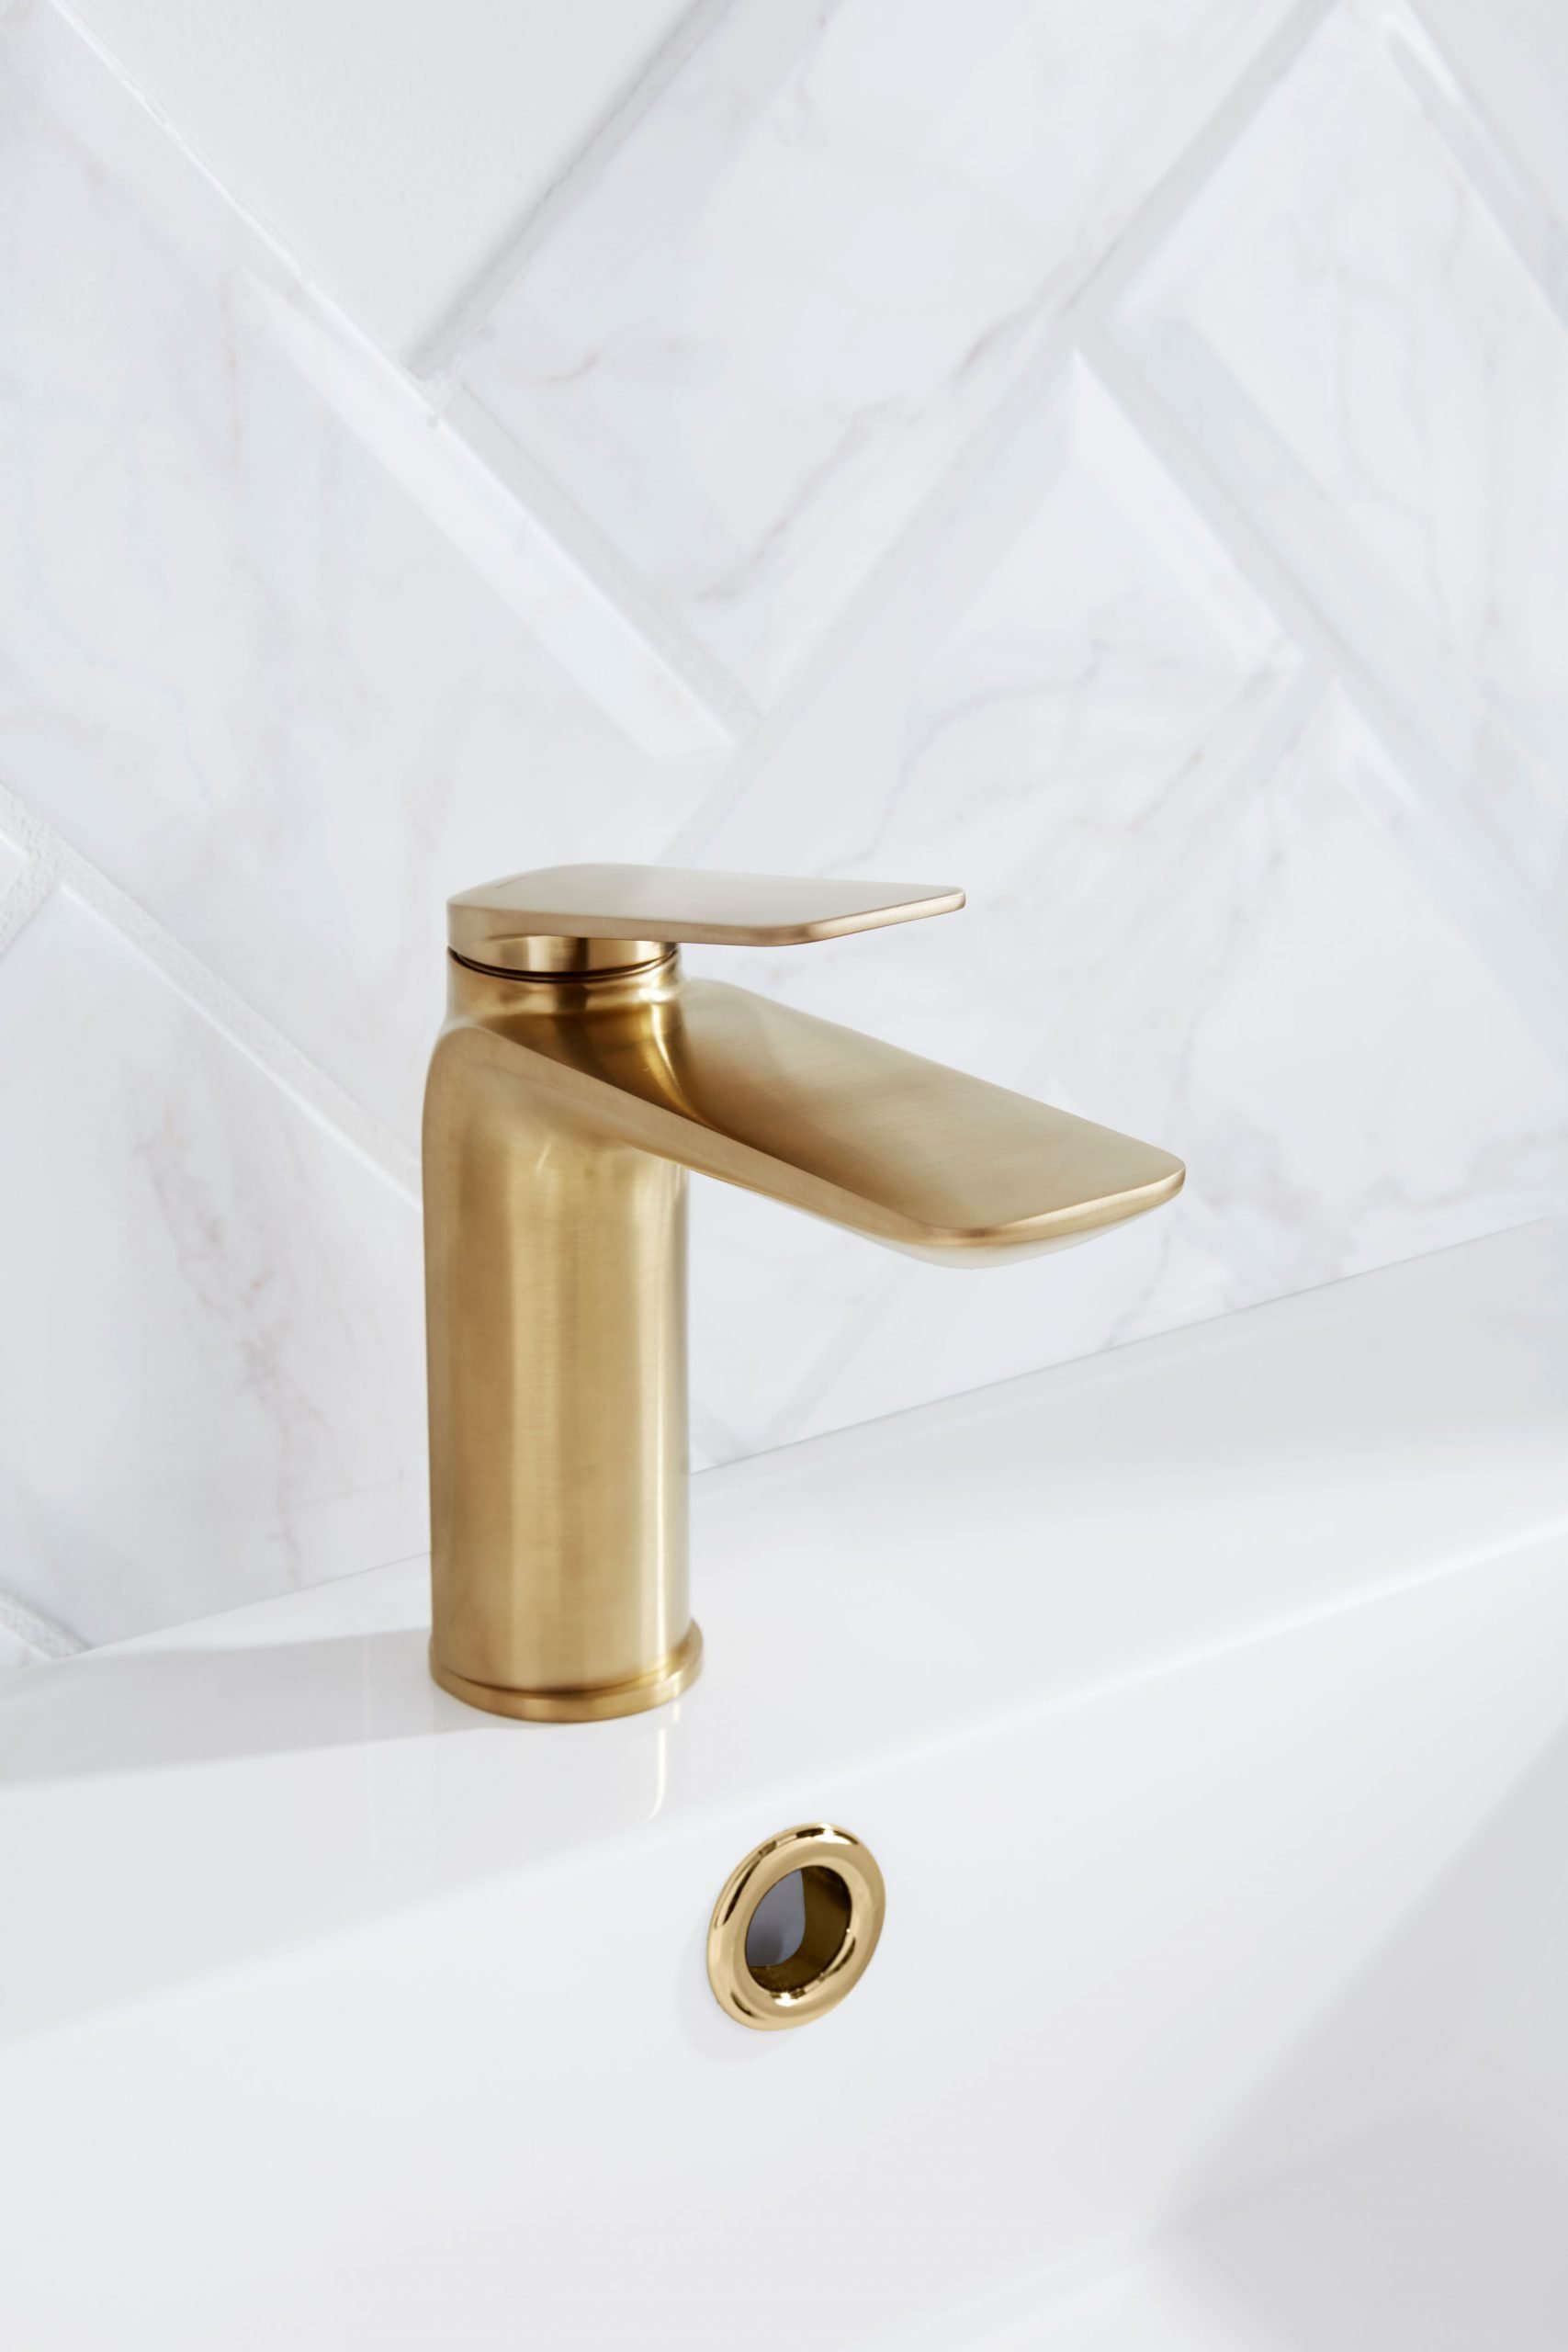 Gold bathroom tap